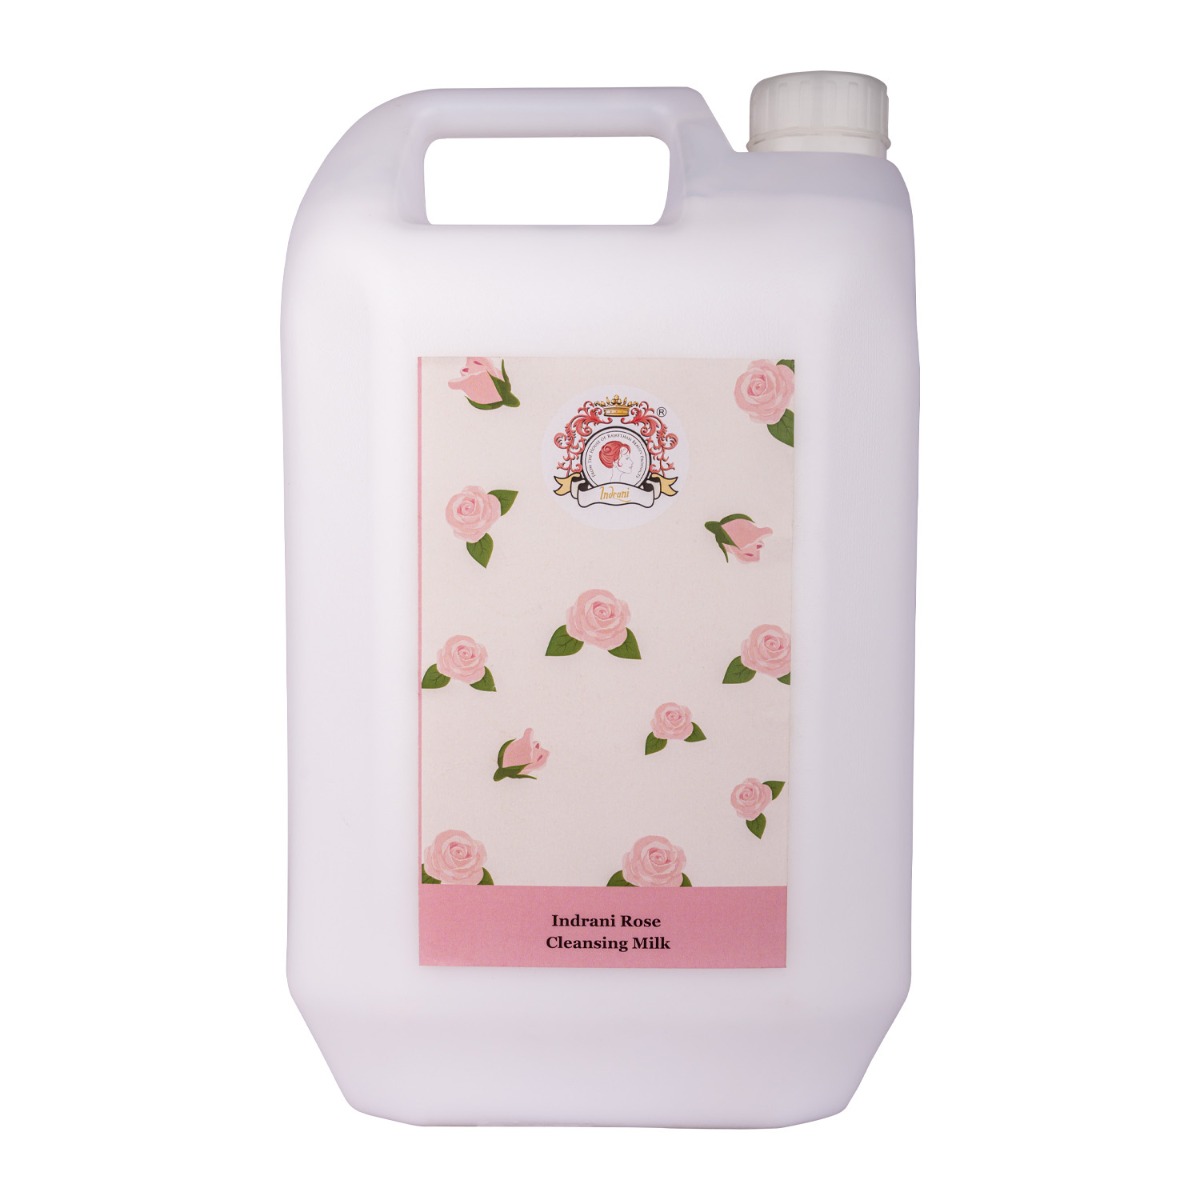 Indrani Rose Cleansing Milk, 5ltr